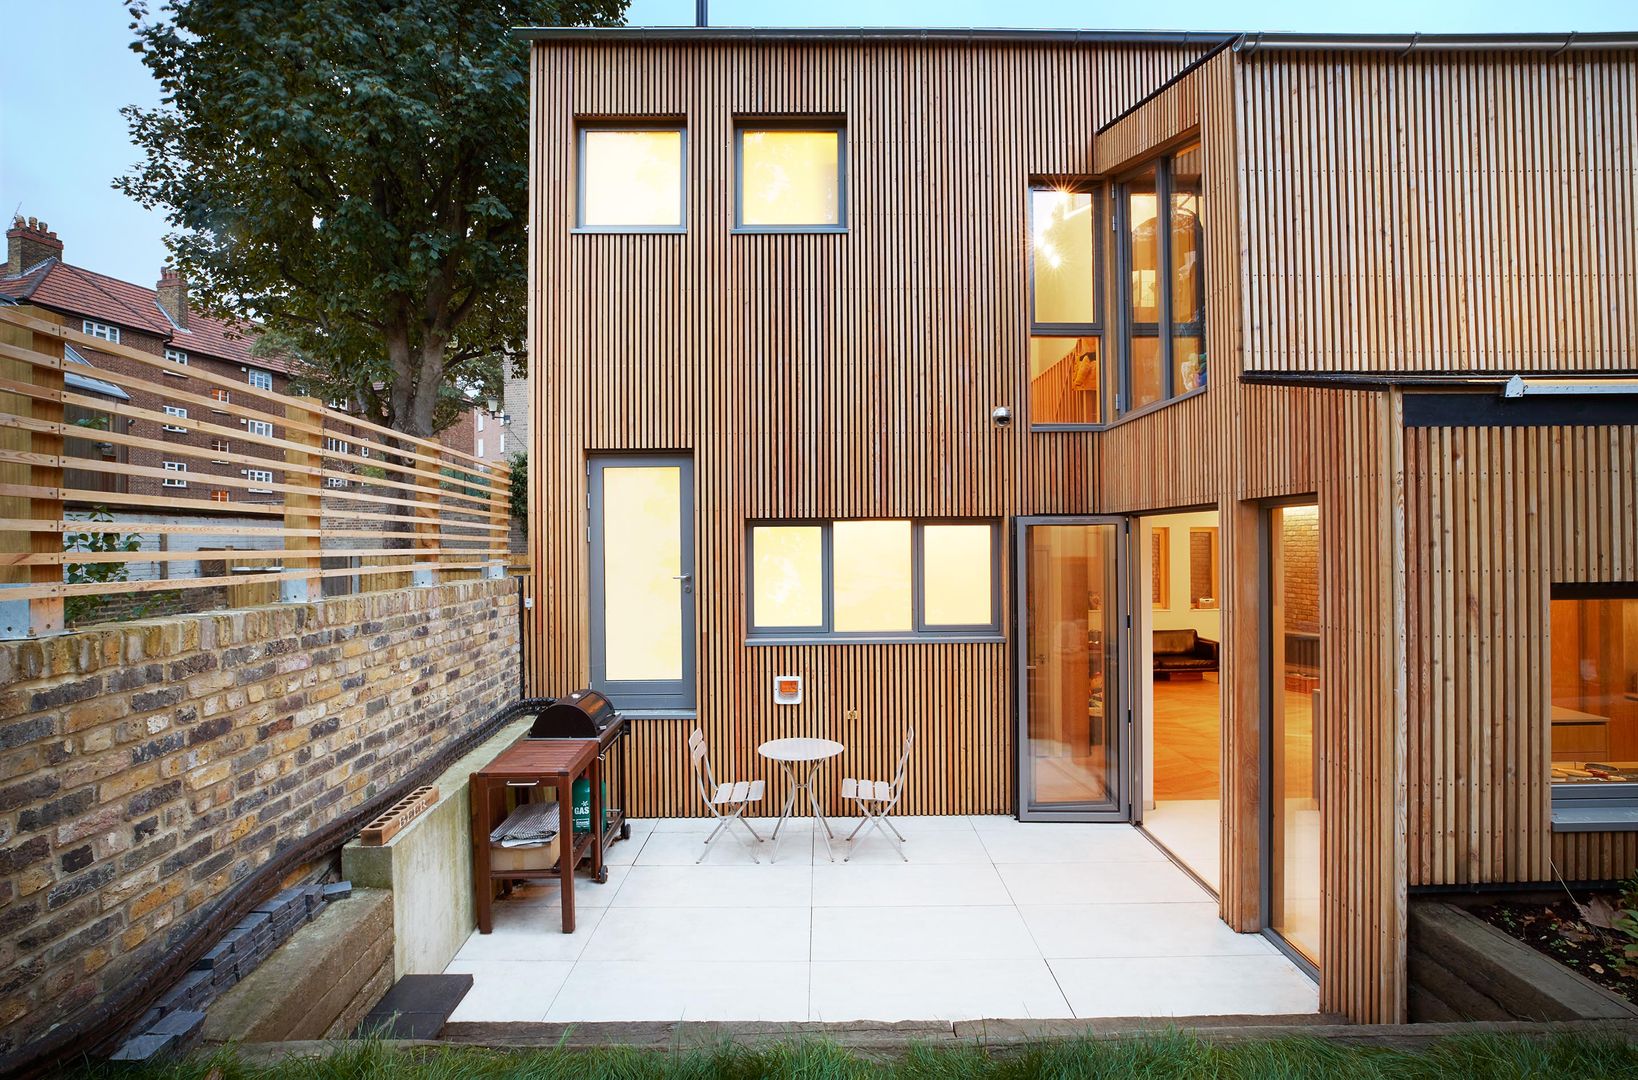 Private Residence - Scoble Place, London Designcubed Varandas, alpendres e terraços modernos wood exterior,patio